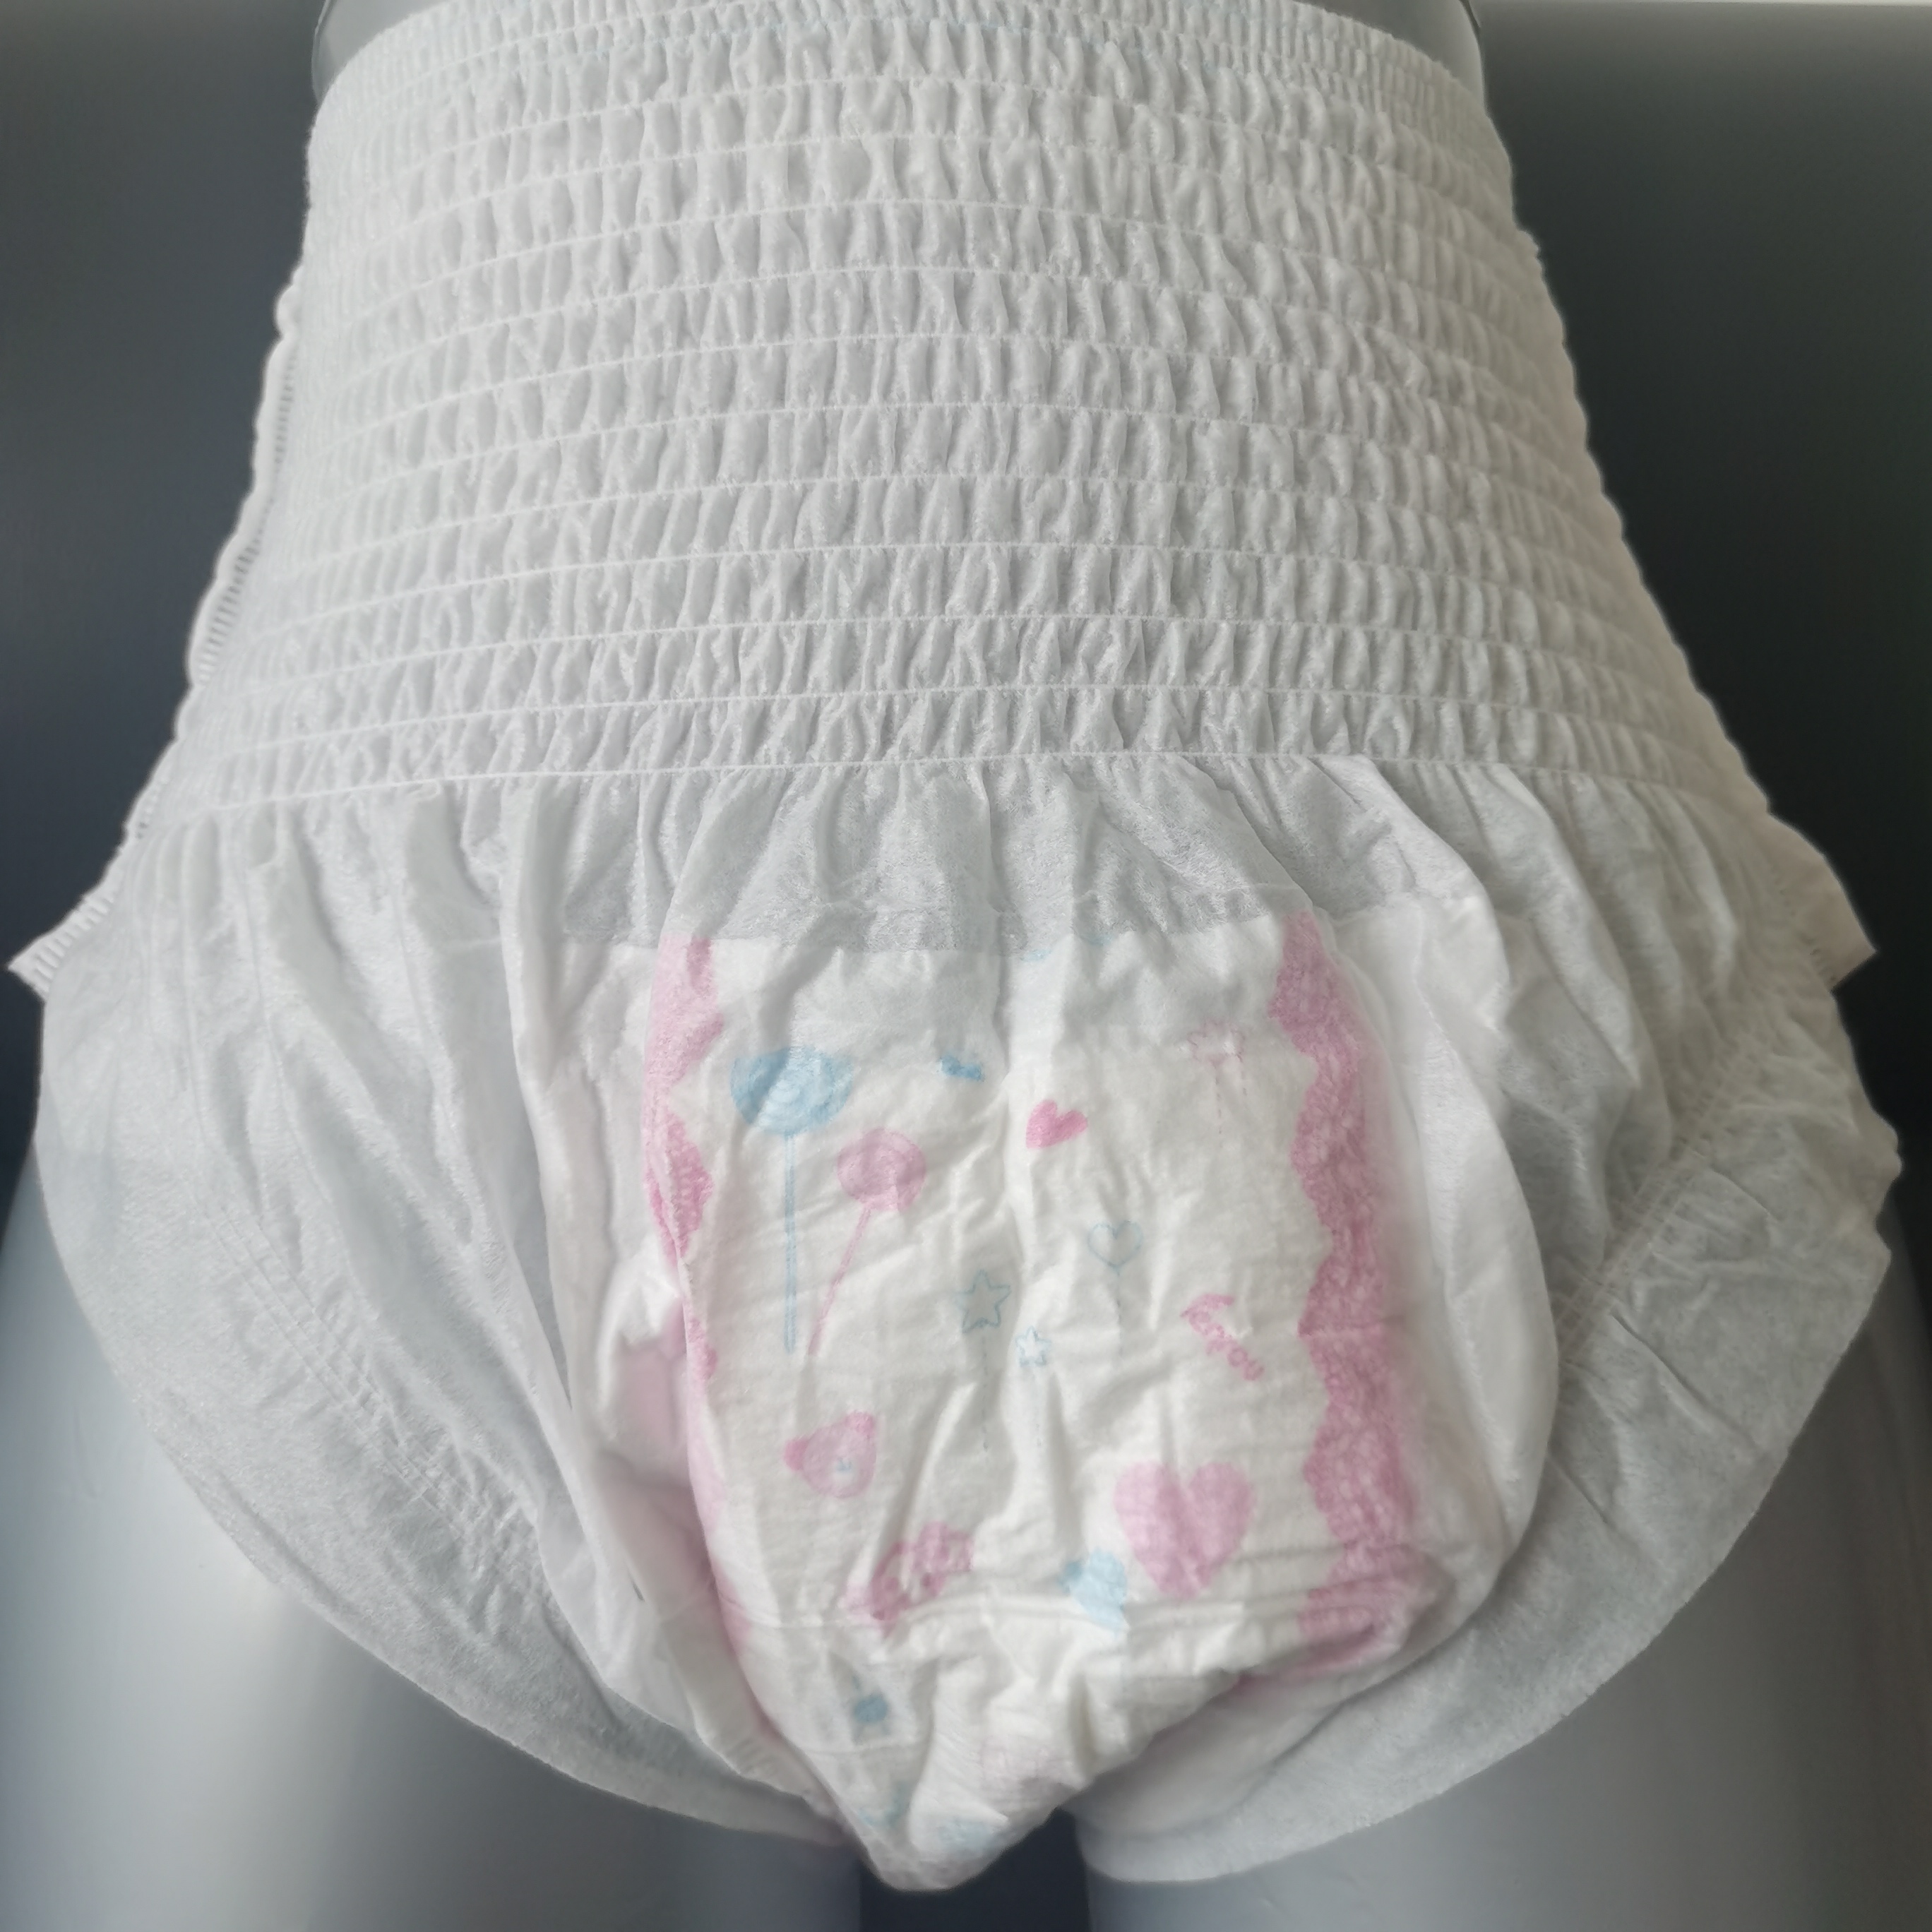 Factory Direct Provide Women Diaper Pants Disposable Menstrual Panties Period Underwear Featured Image